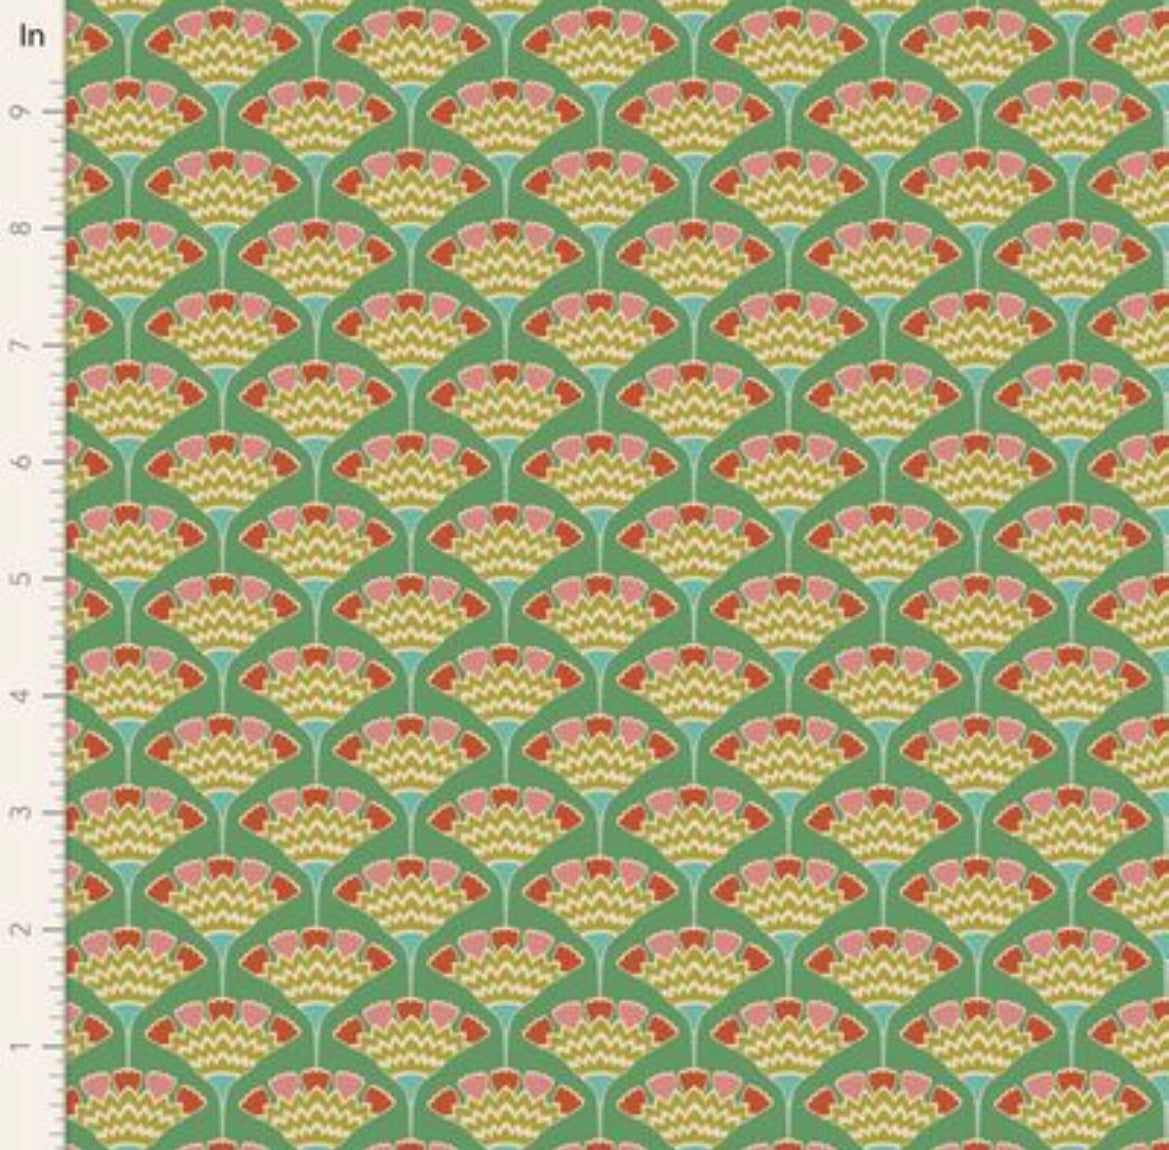 Tasselflower Green - Pie in the Sky Collection - Tilda Fabrics